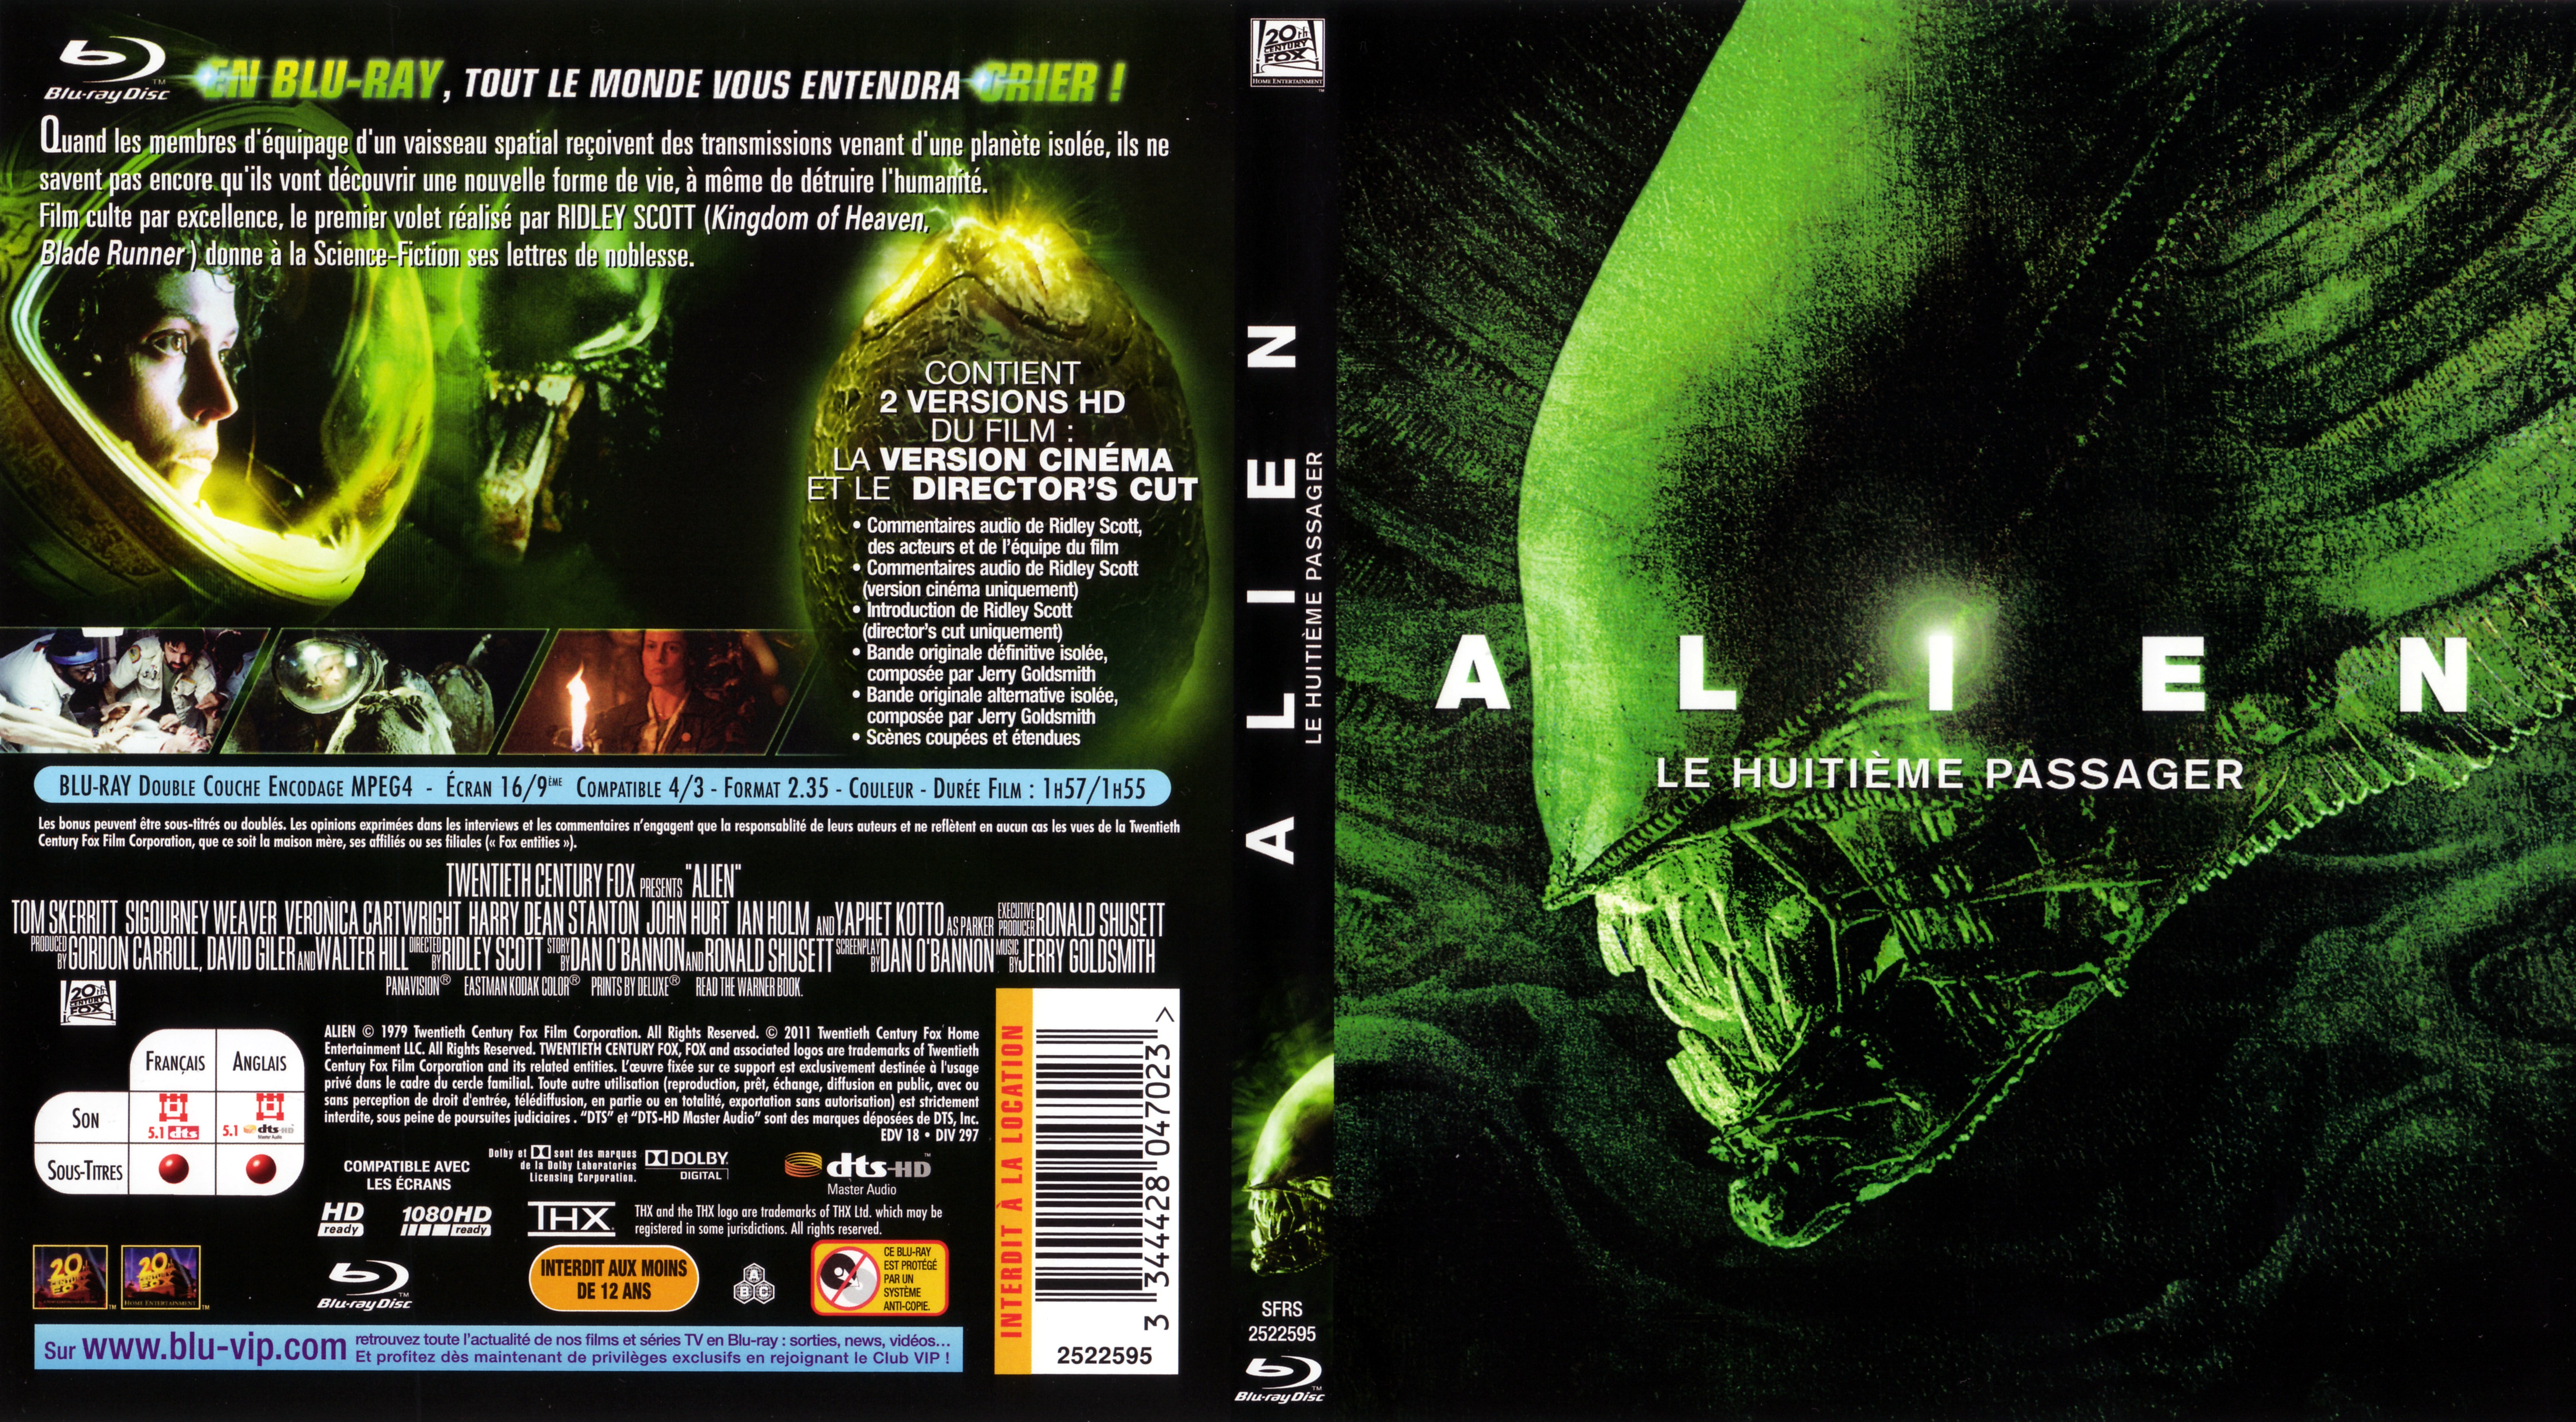 Jaquette DVD Alien (BLU-RAY) v2